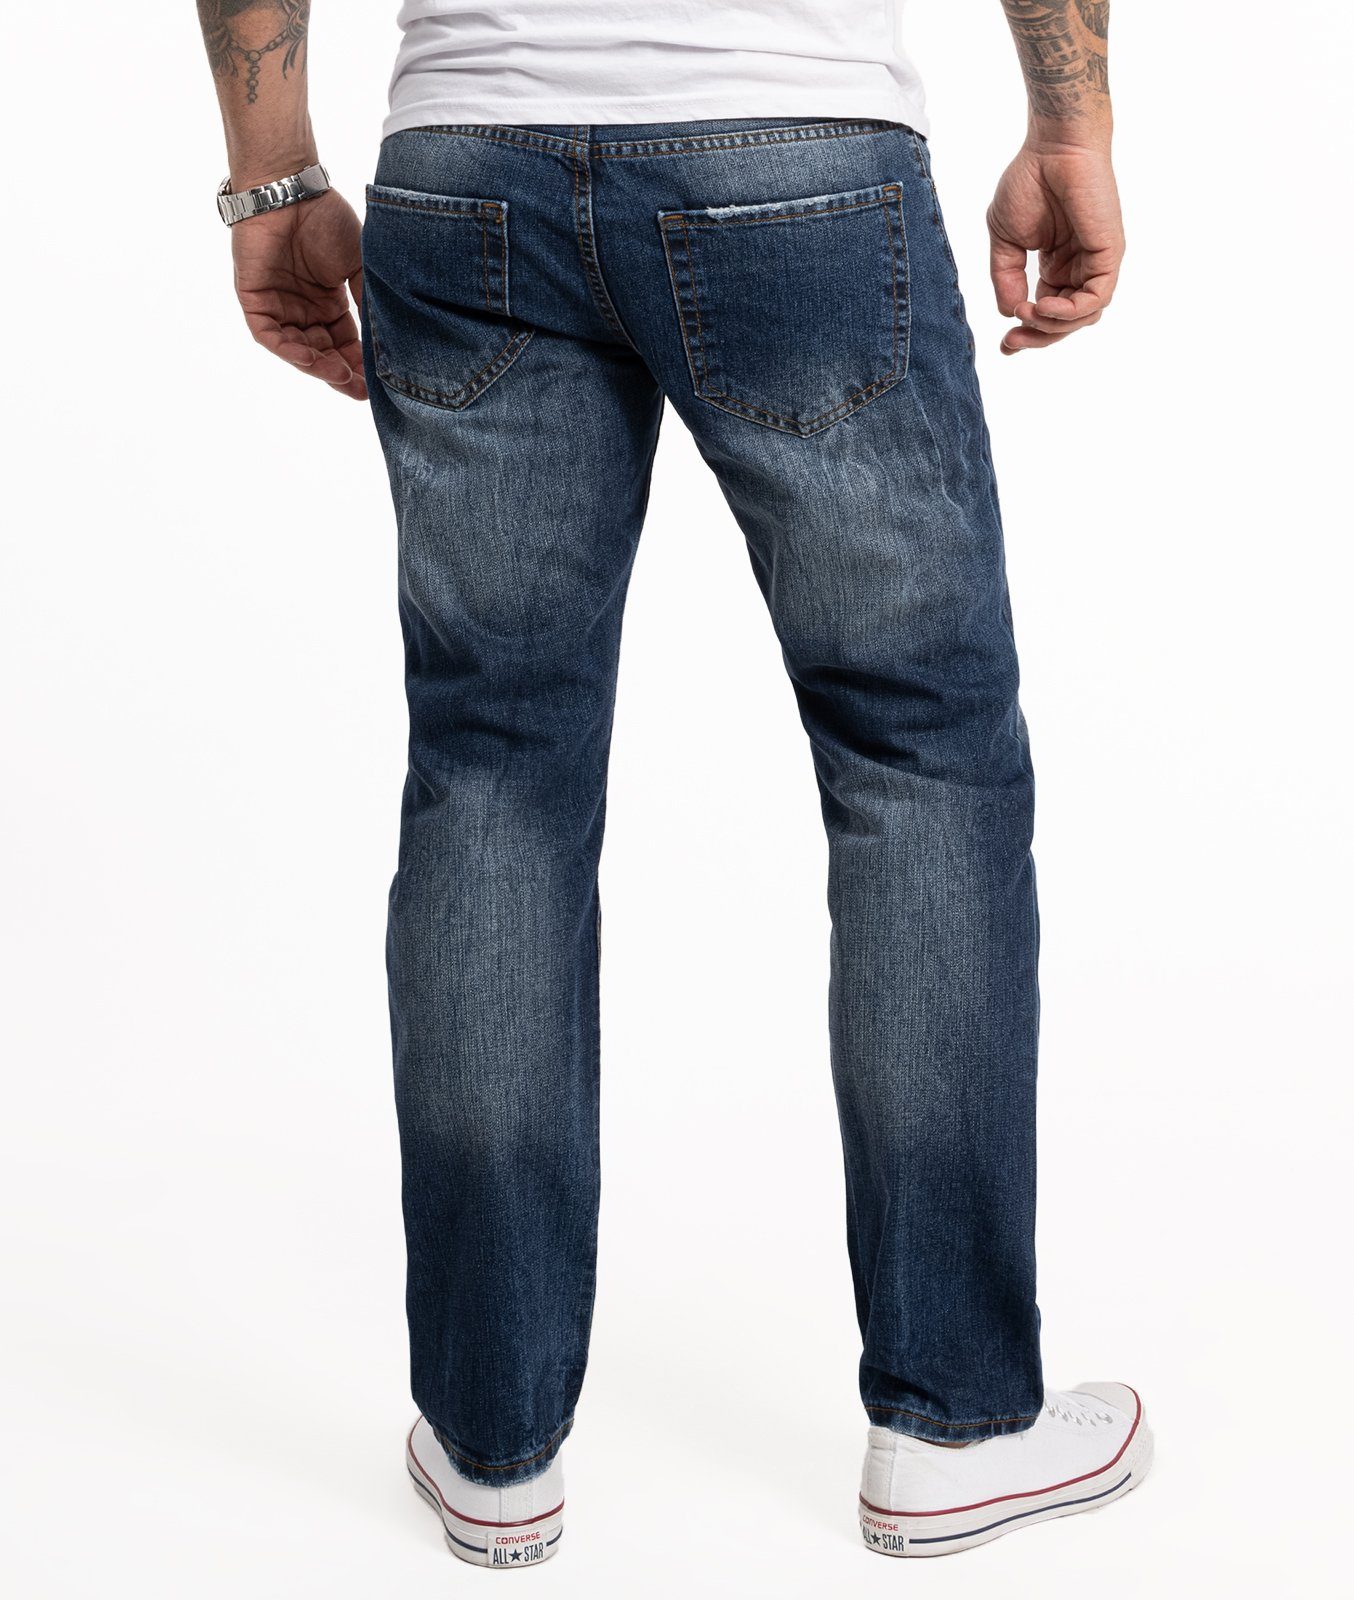 Herren Jeans Rock Creek Regular-fit-Jeans Herren Jeans Stonewashed Blau RC-2357